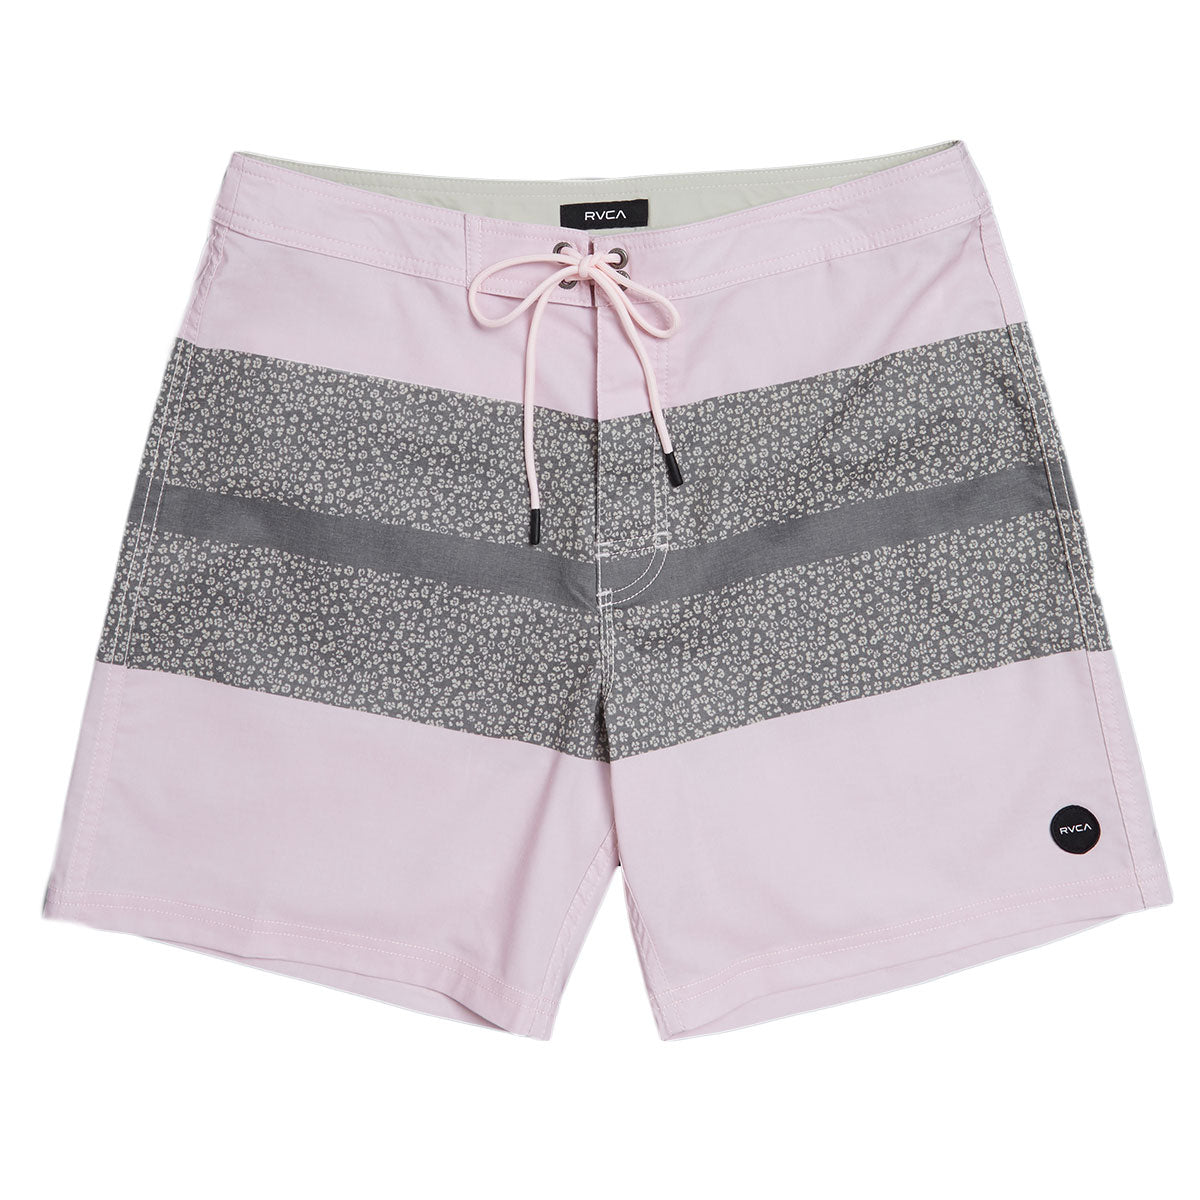 RVCA Westport Board Shorts - Light Pink image 1